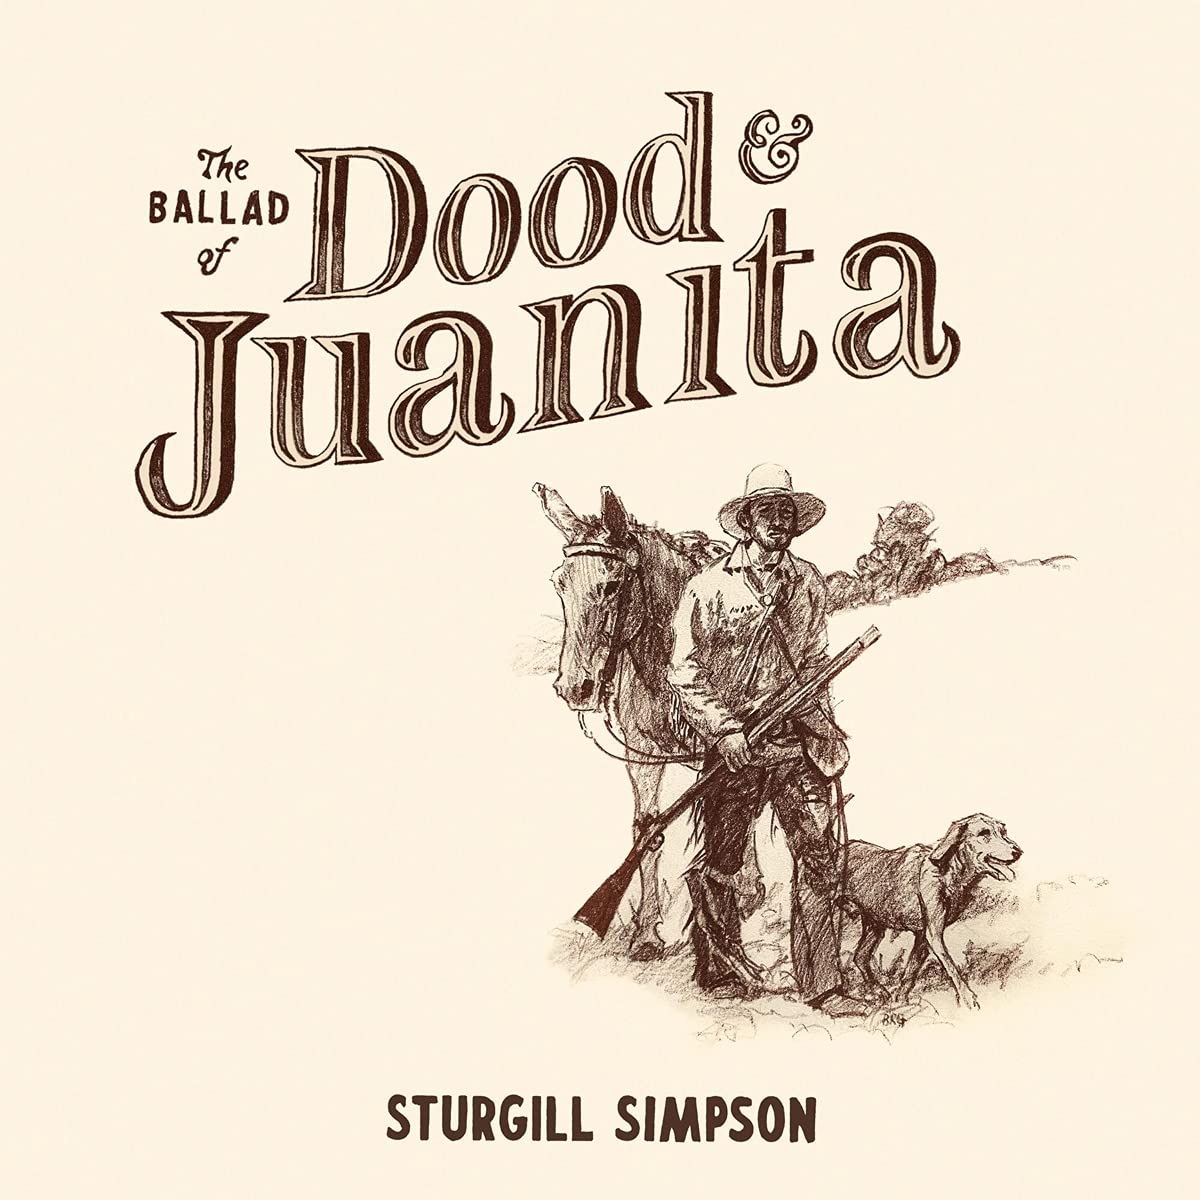 Sturgill Simpson - The Ballad of Dood & Juanita (Vinyl LP)